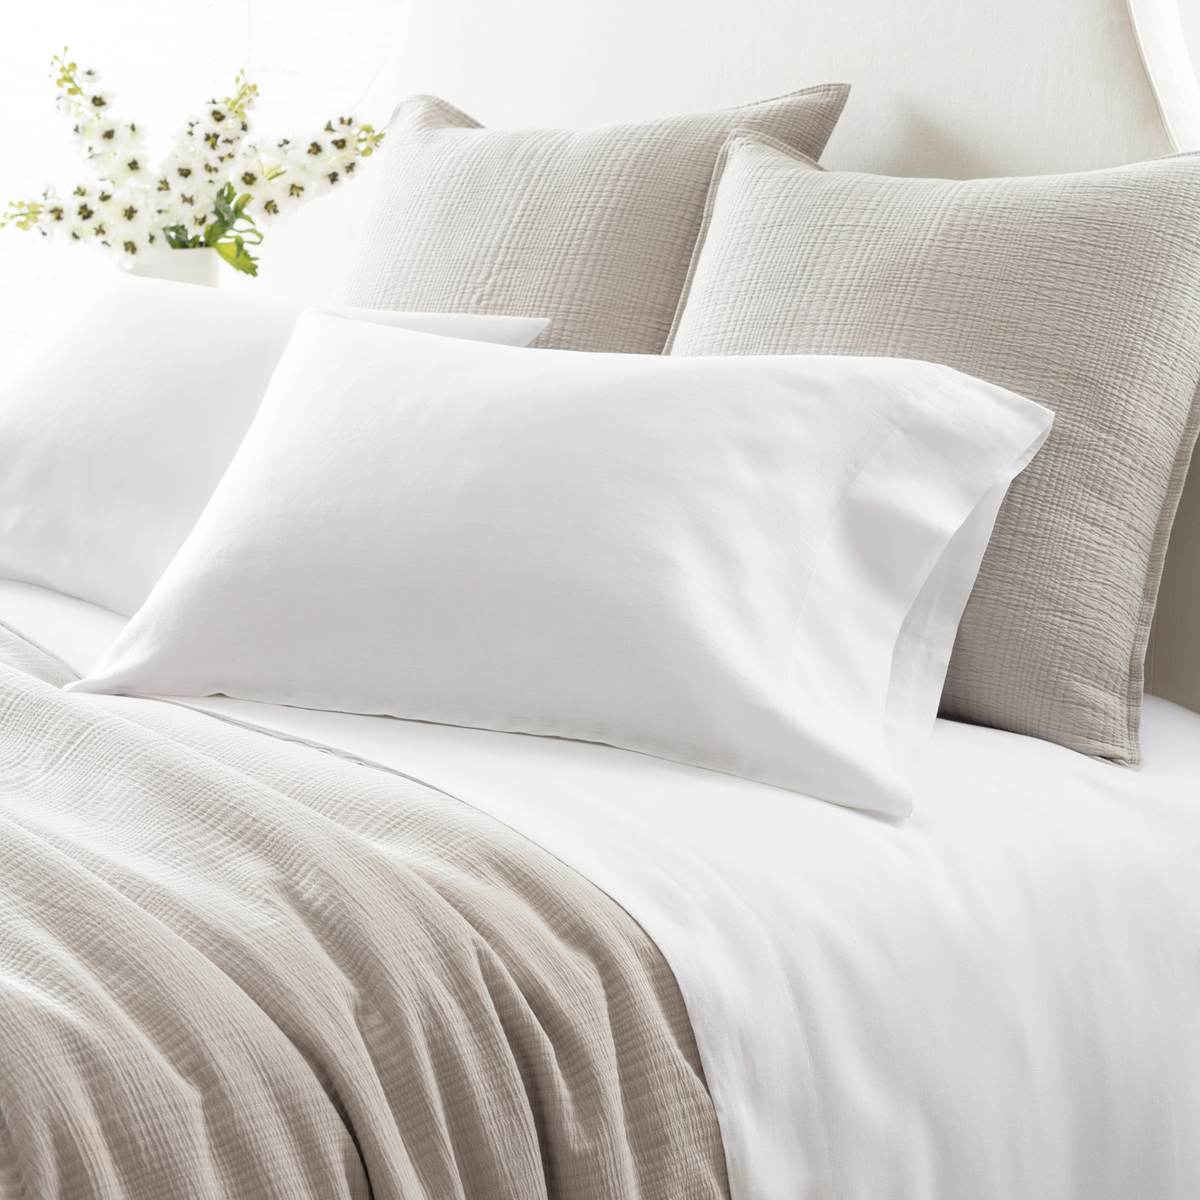 White Pillowcases of Pine Cone Hill Lush Linen Bedding